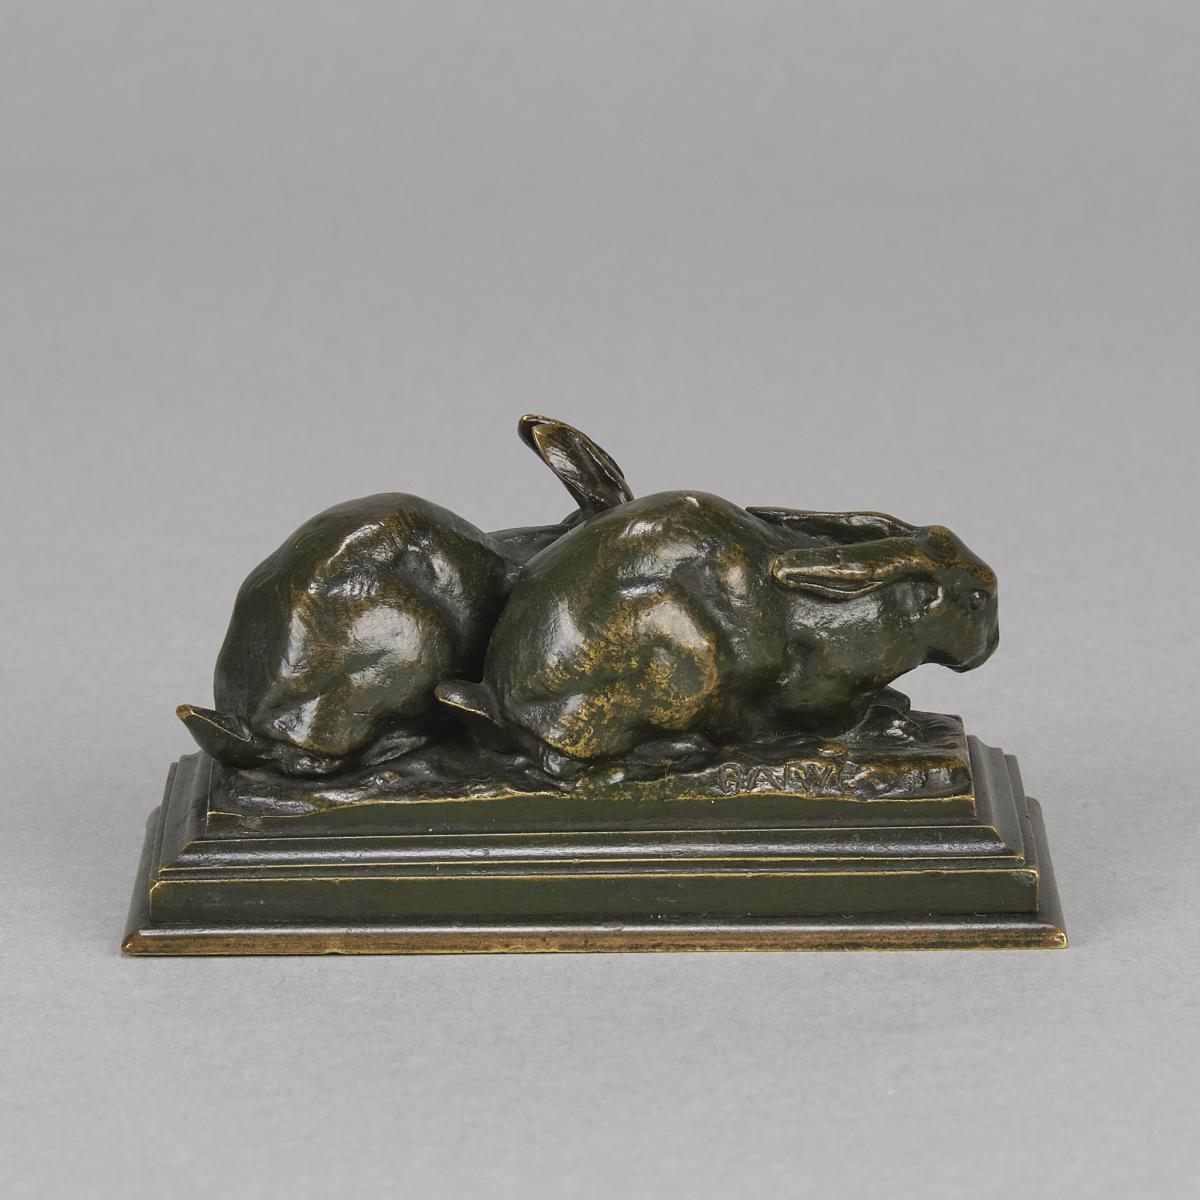 19th Century Animalier Bronze Sculpture "Group de Lapins" by Antoine L Barye